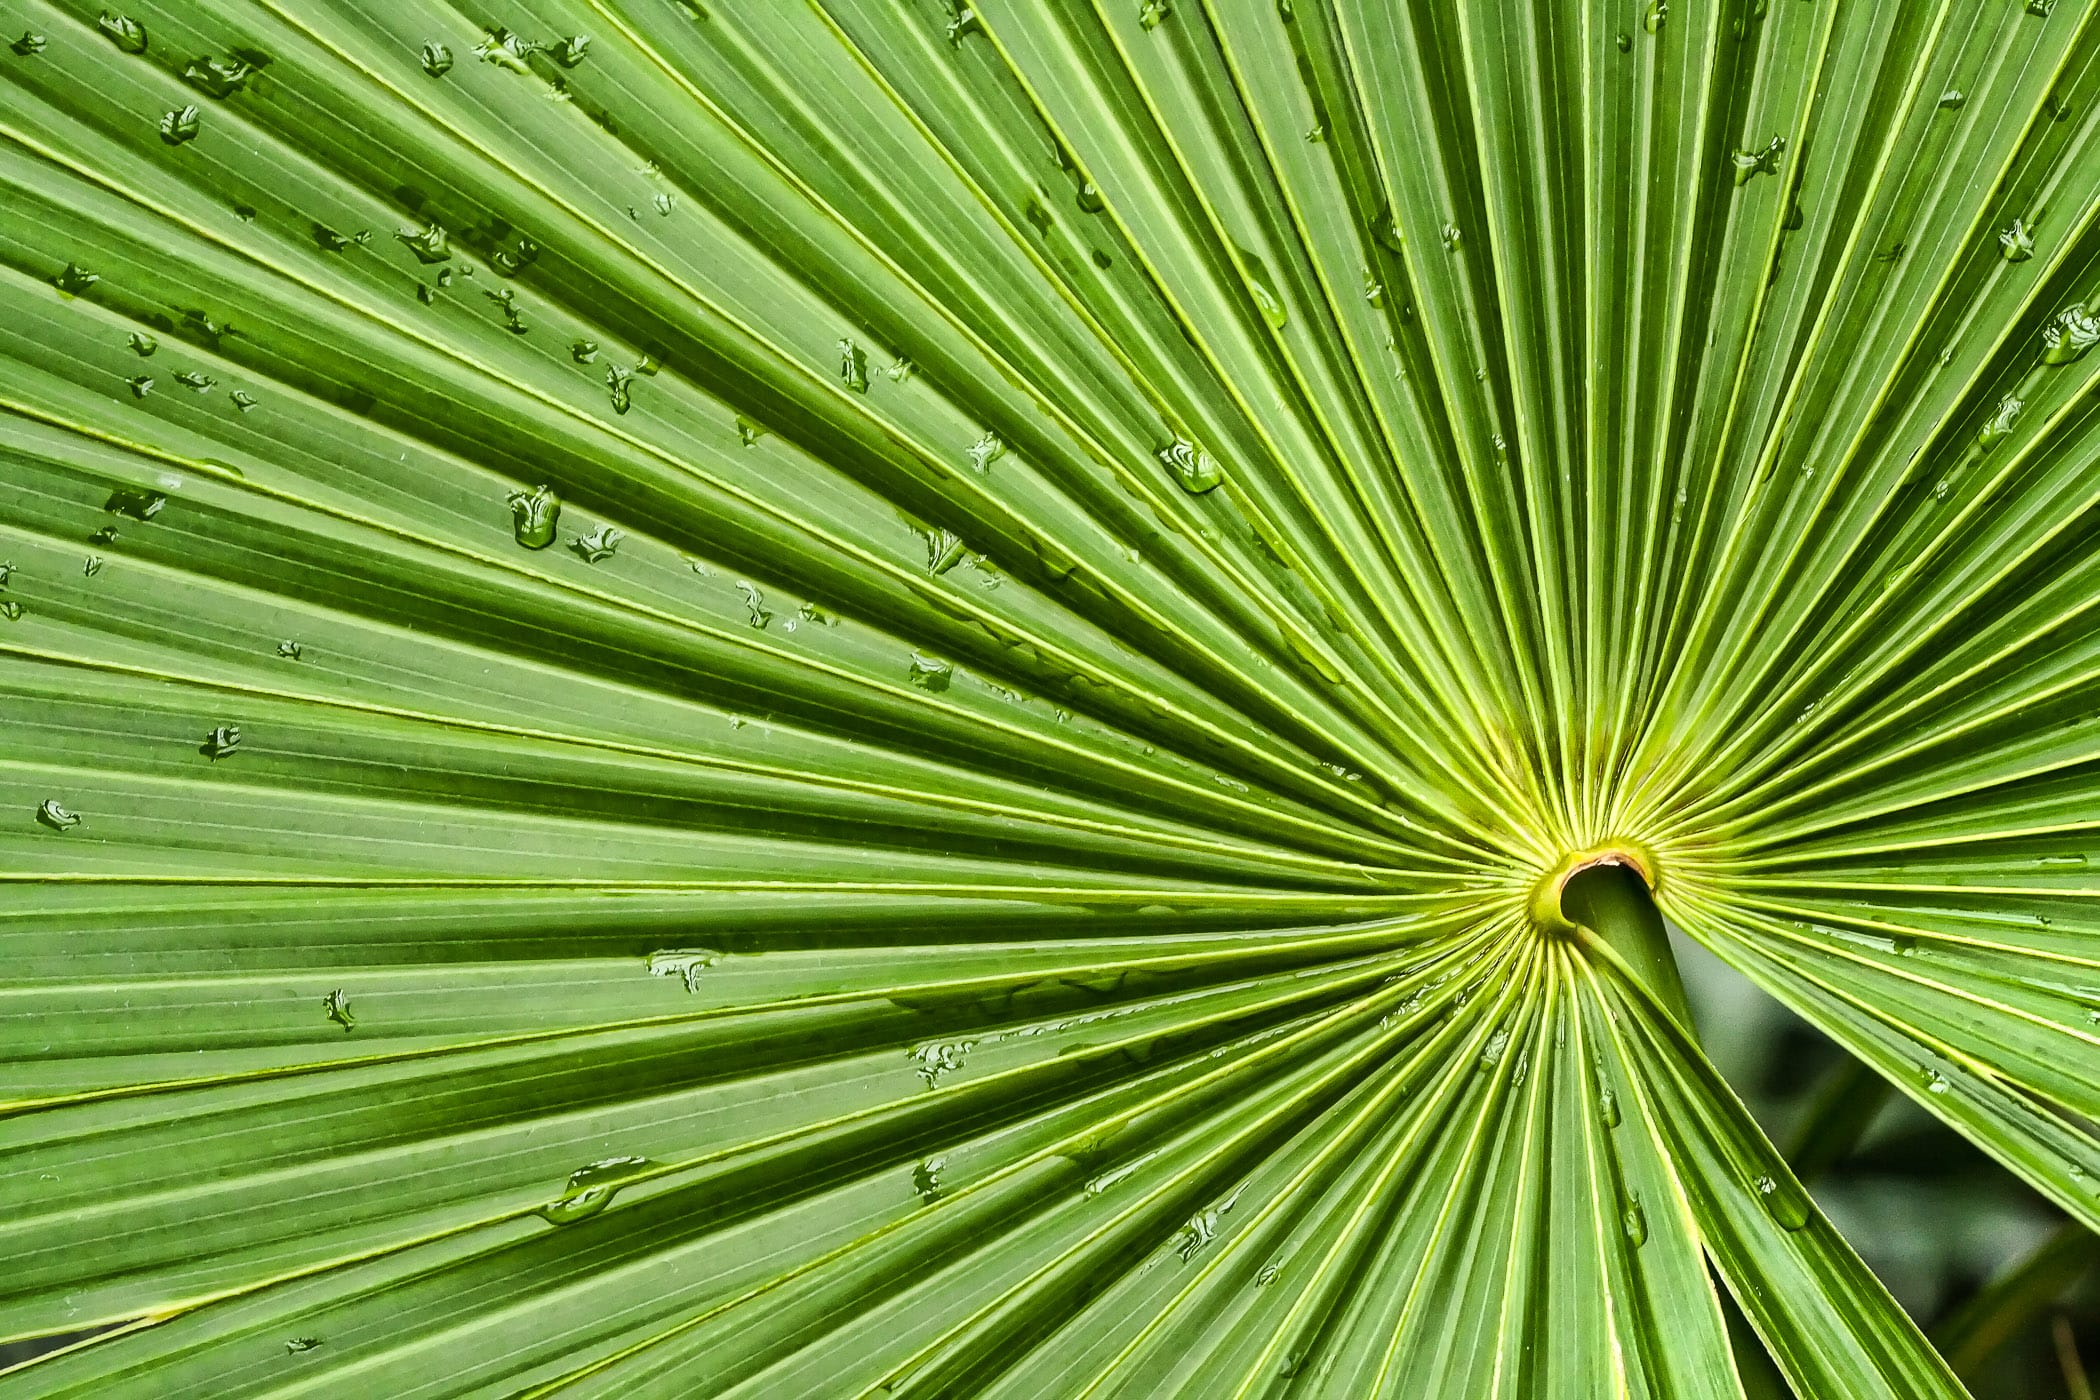 A palm frond at the Texas Discovery Gardens, Fair Park, Dallas.